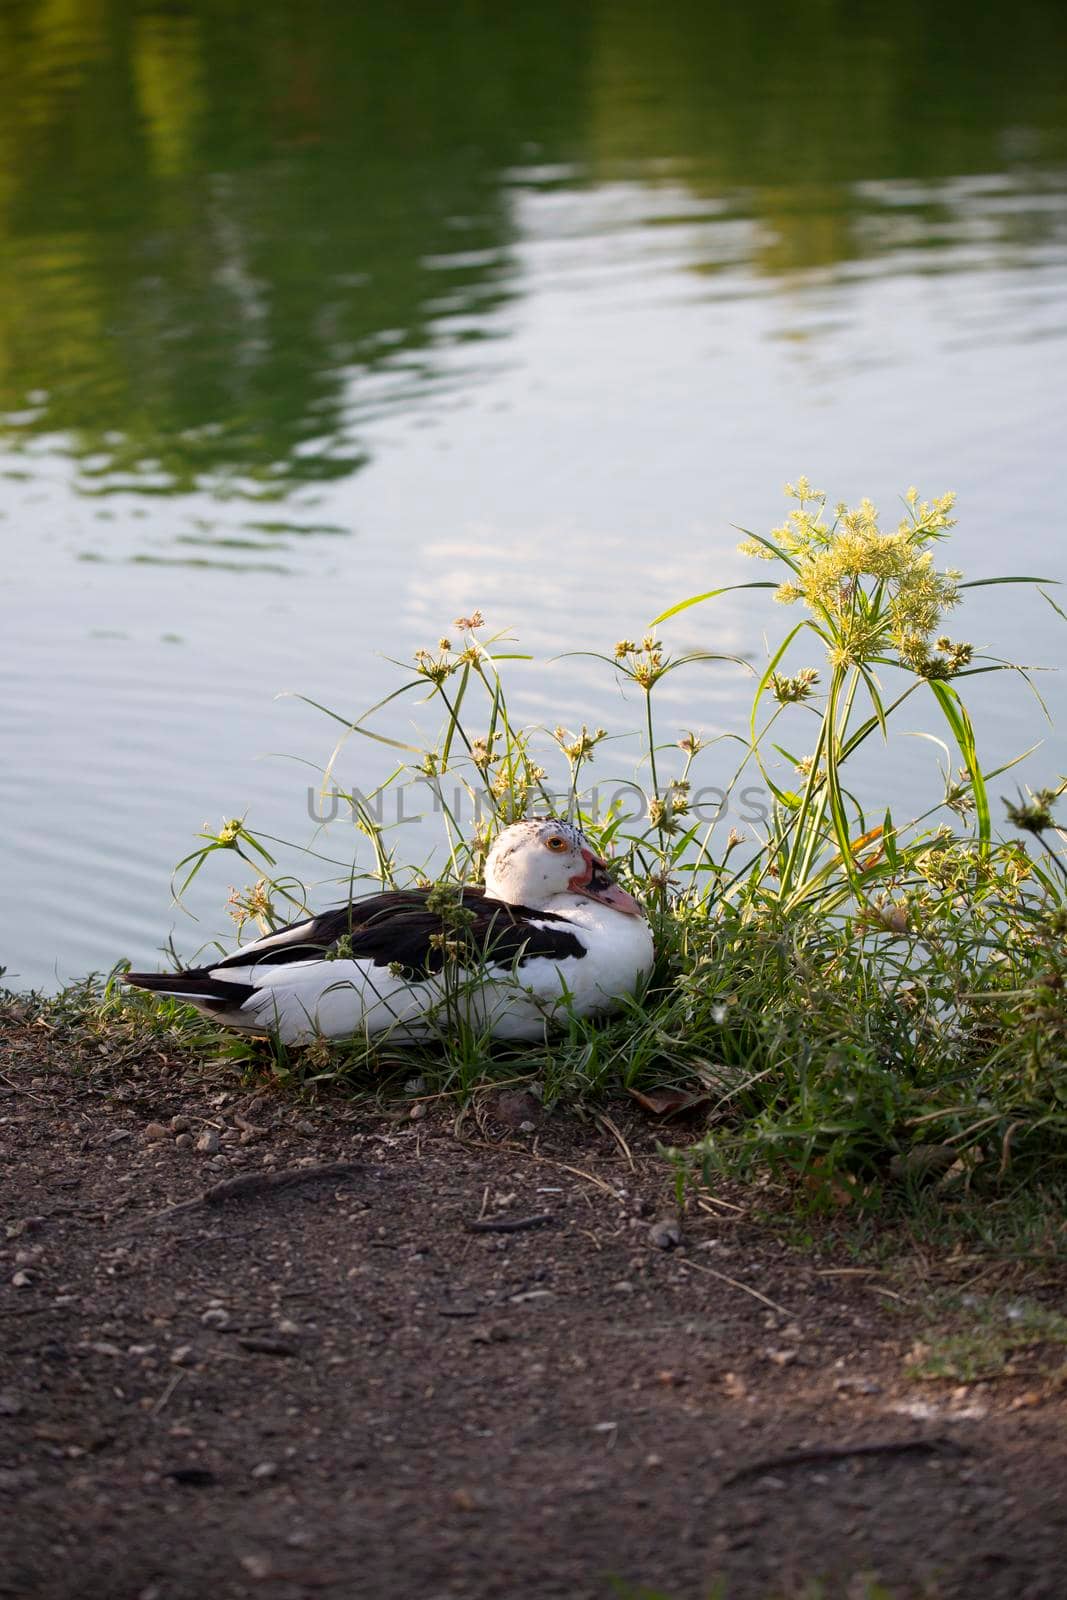 Muscovy duck ()Cairina moschata resting near foliage beside a park pond